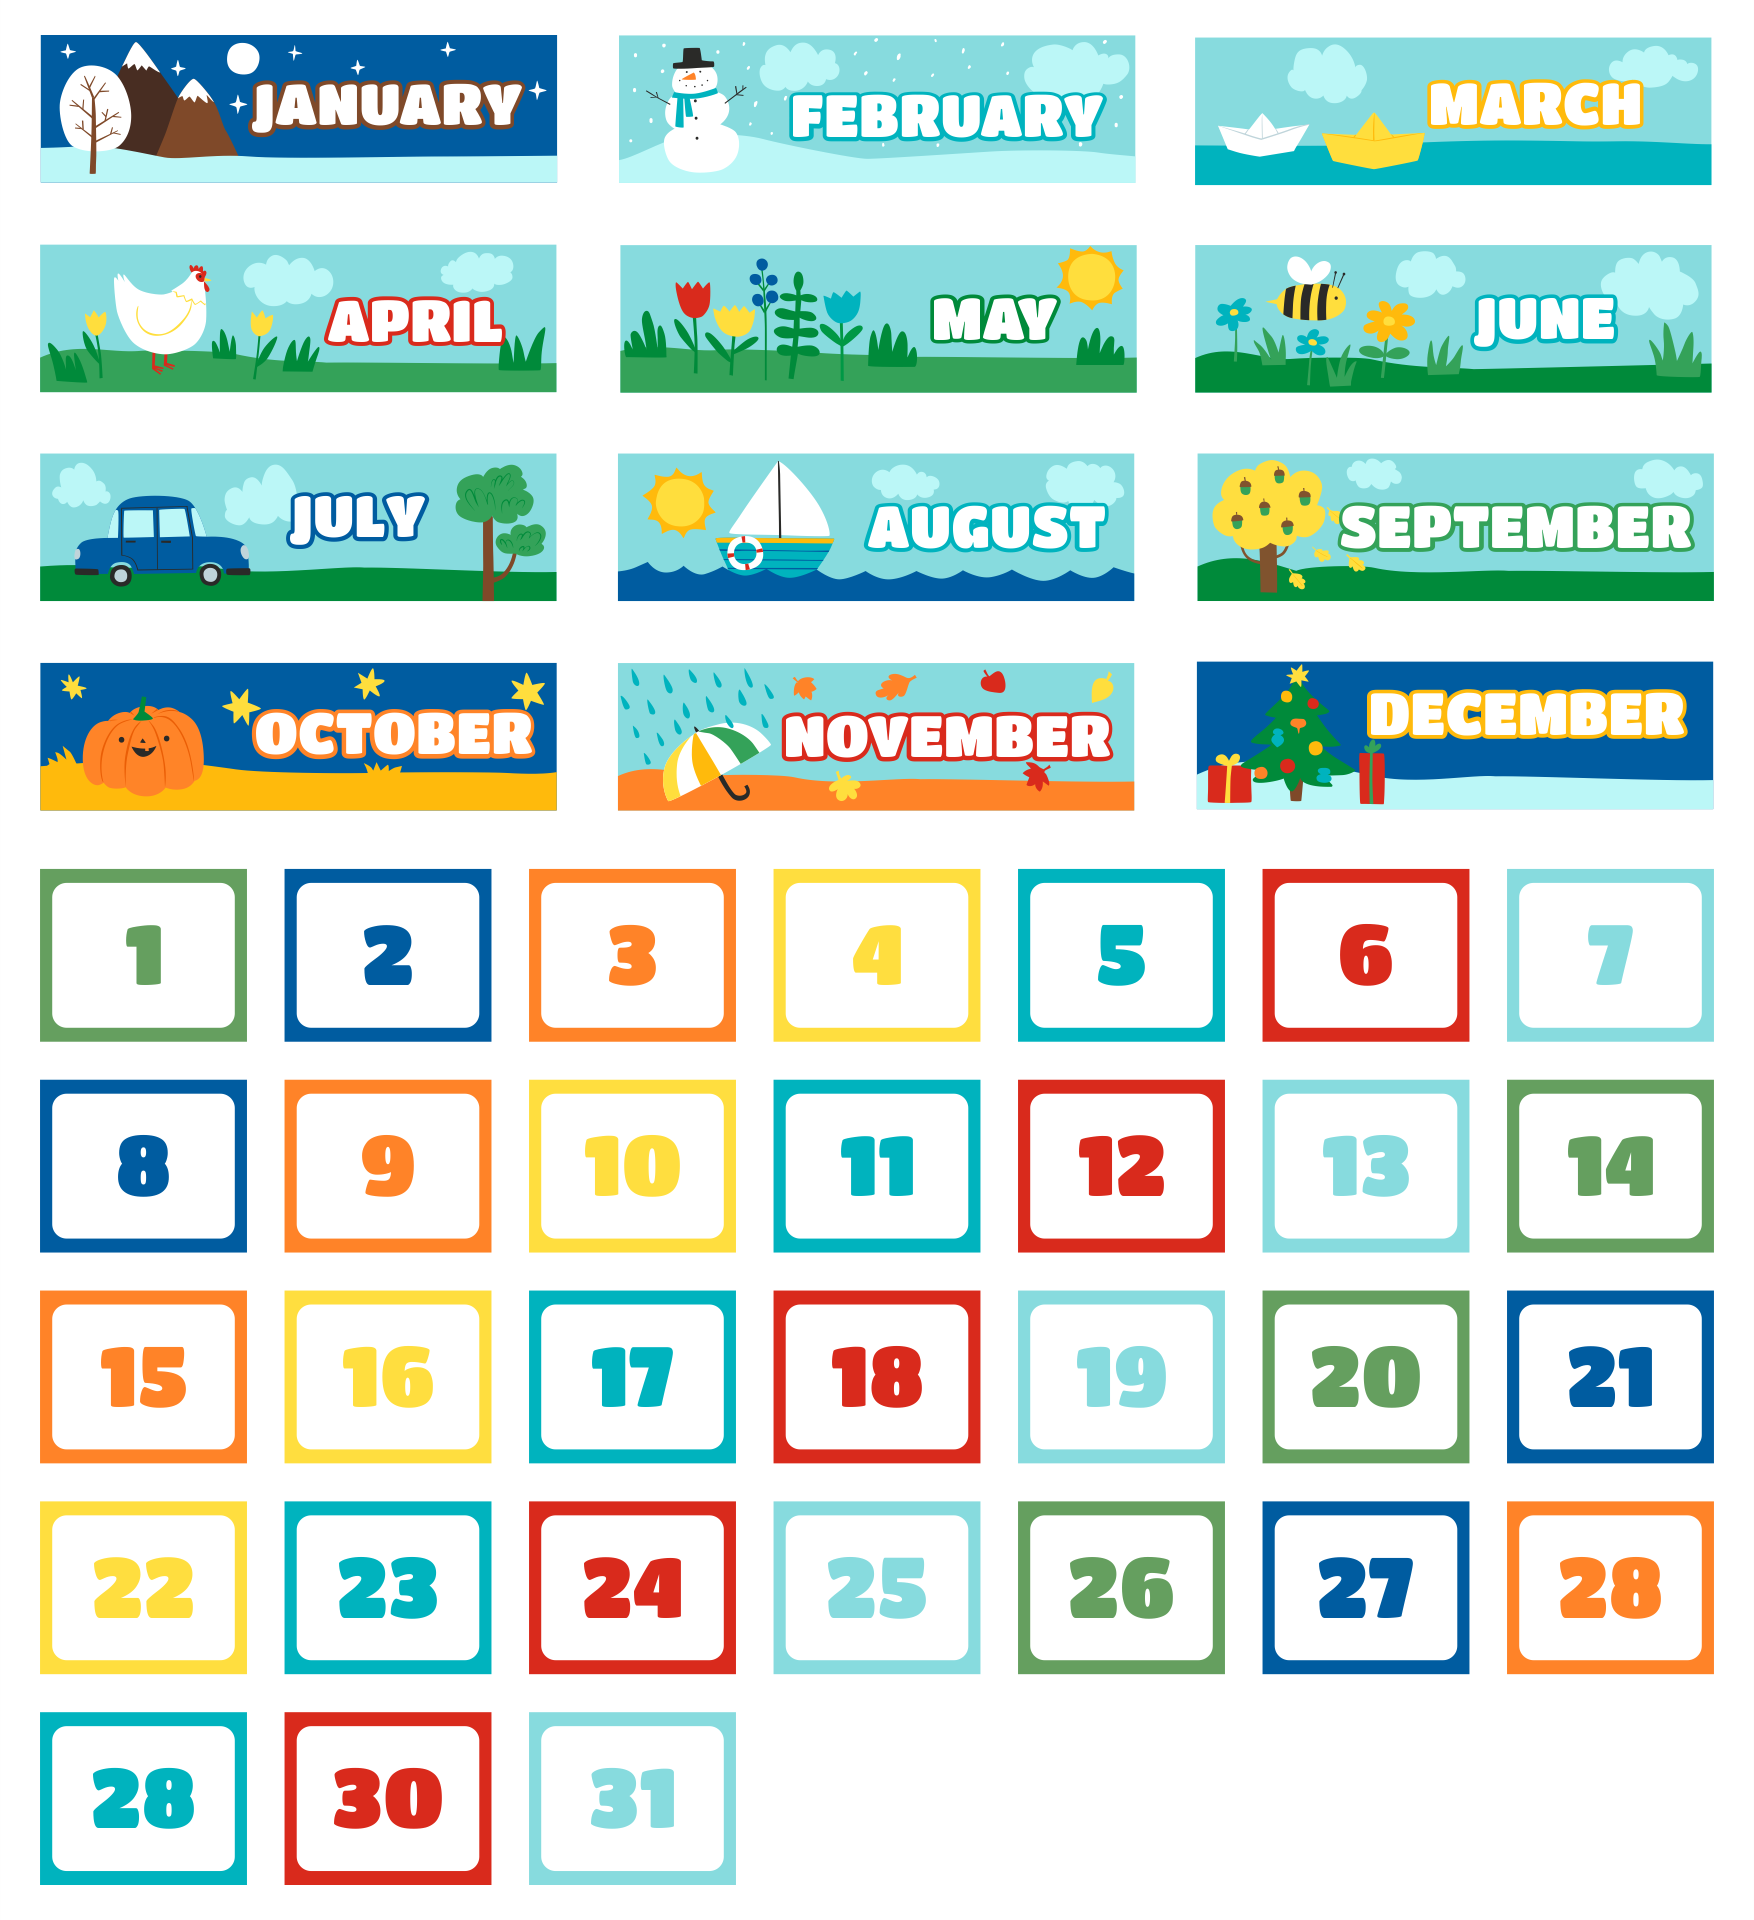 Printable Classroom Calendar Months